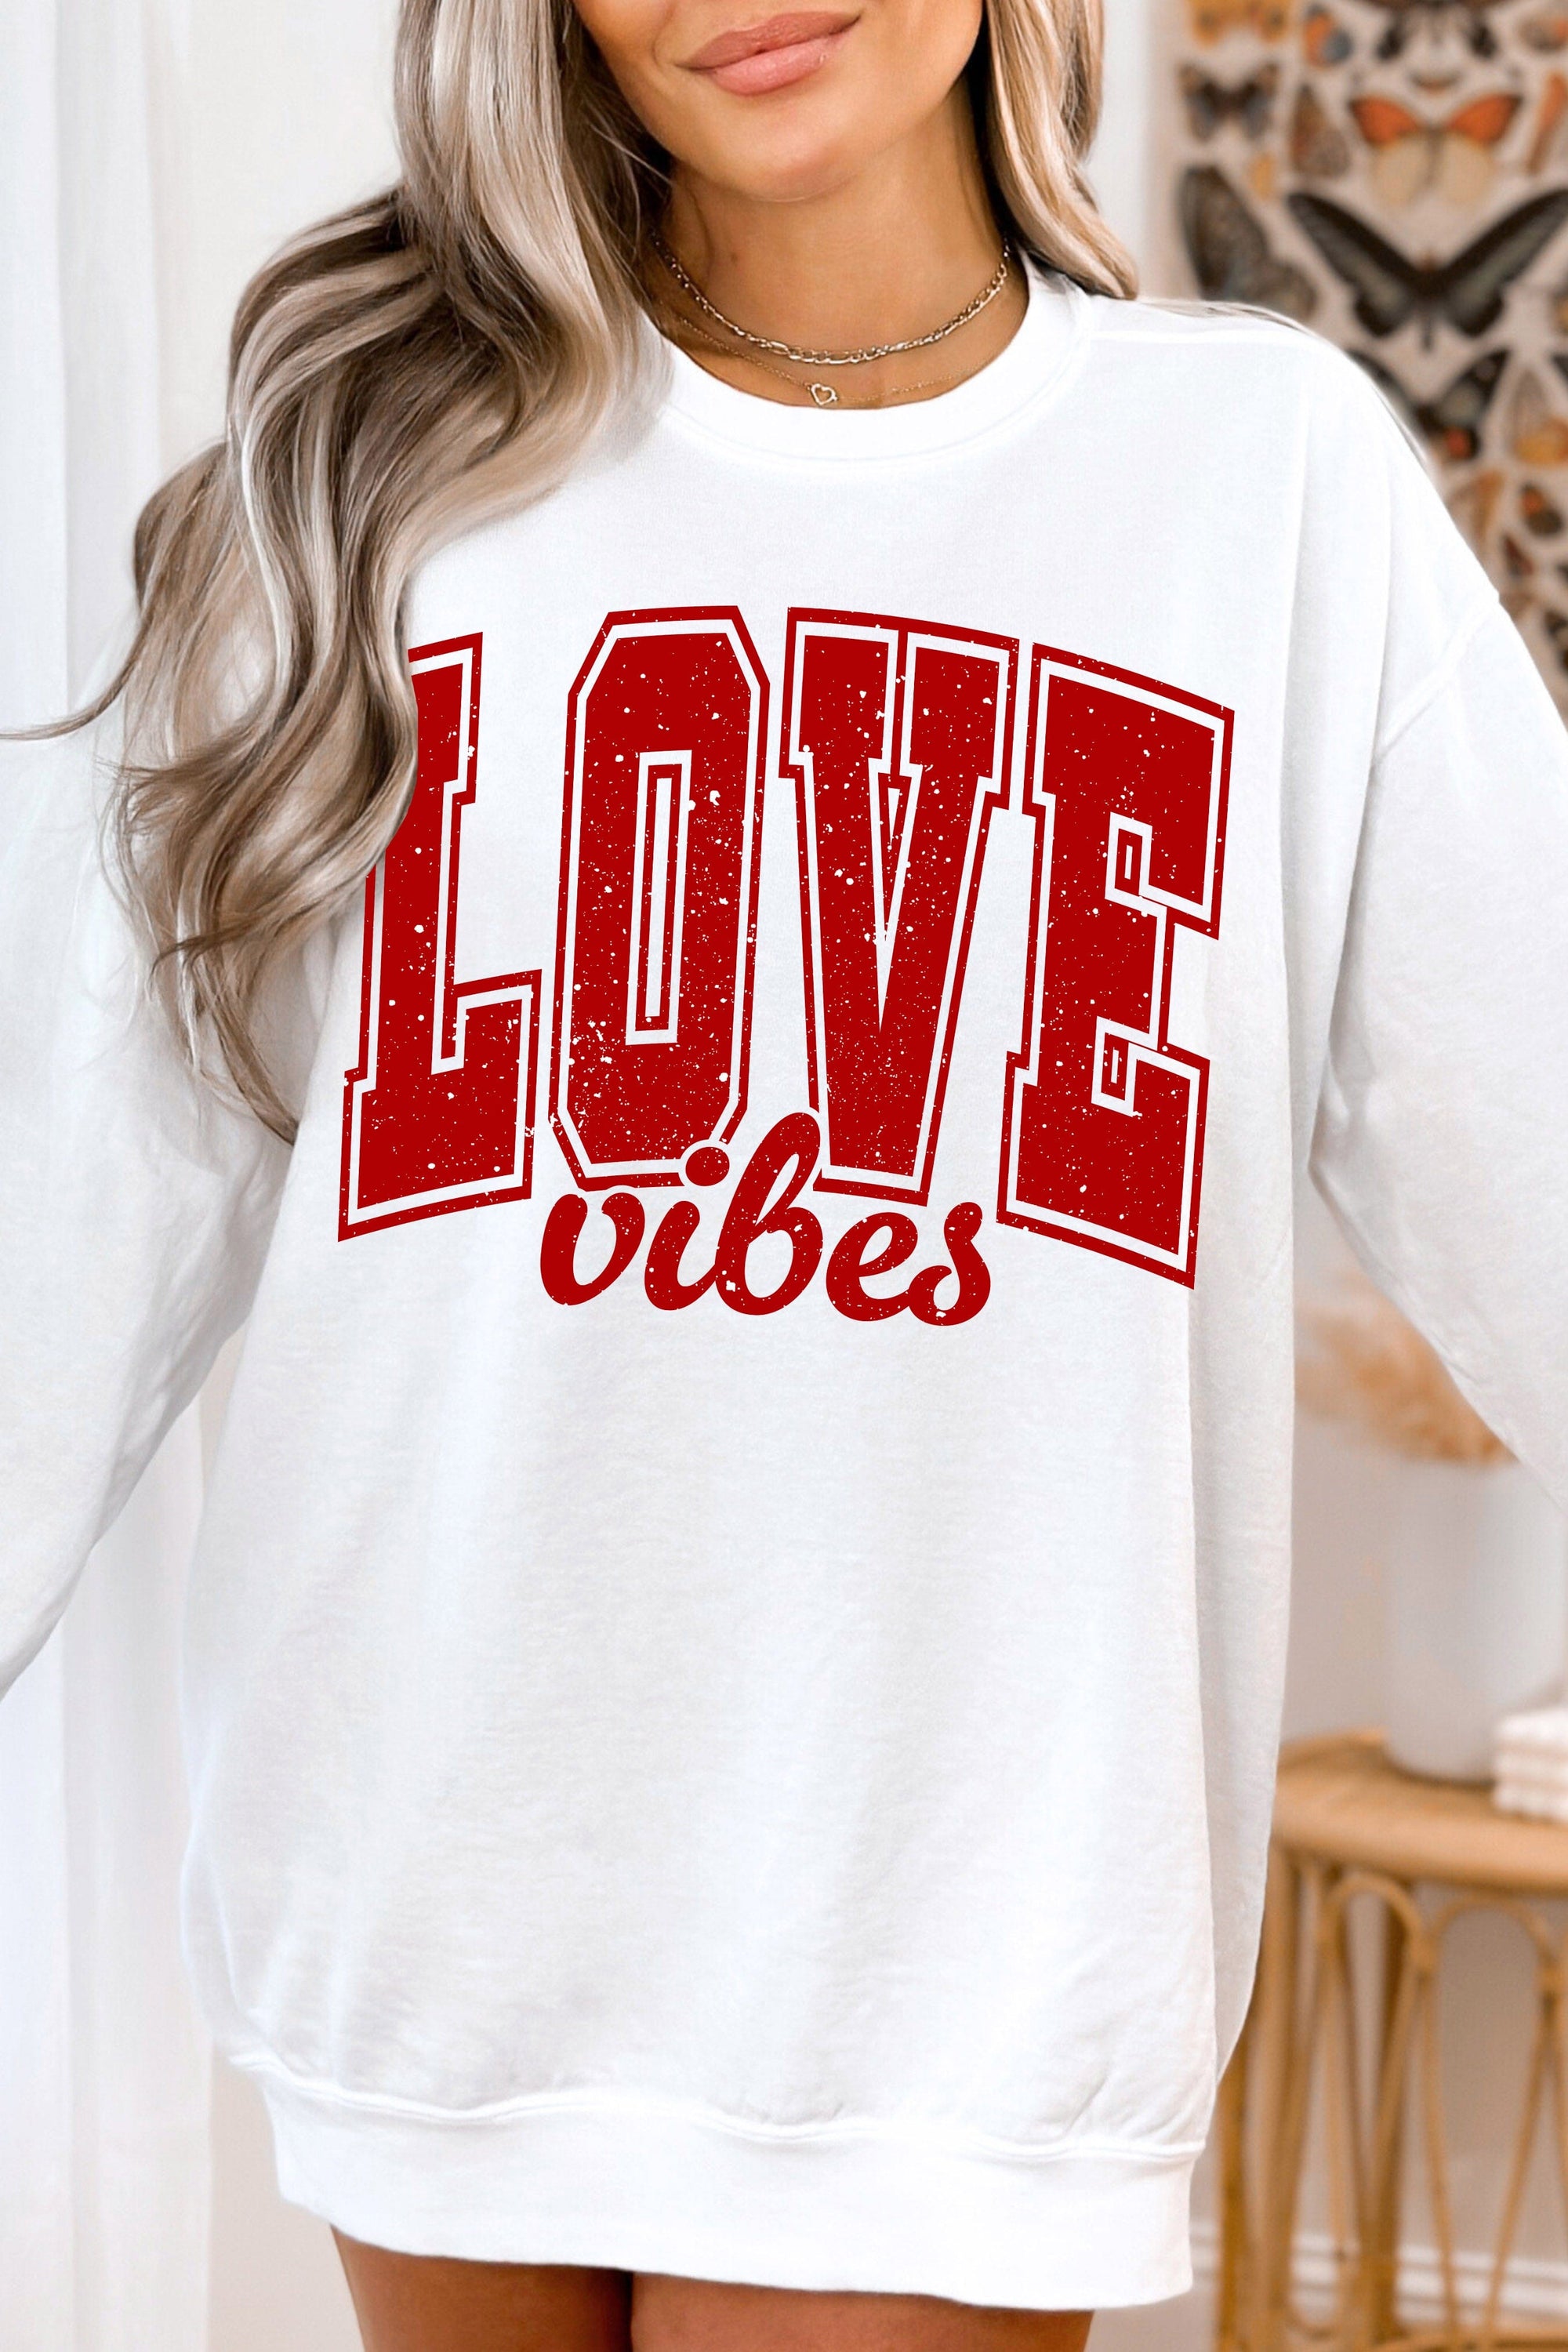 Love Vibes Sweatshirt